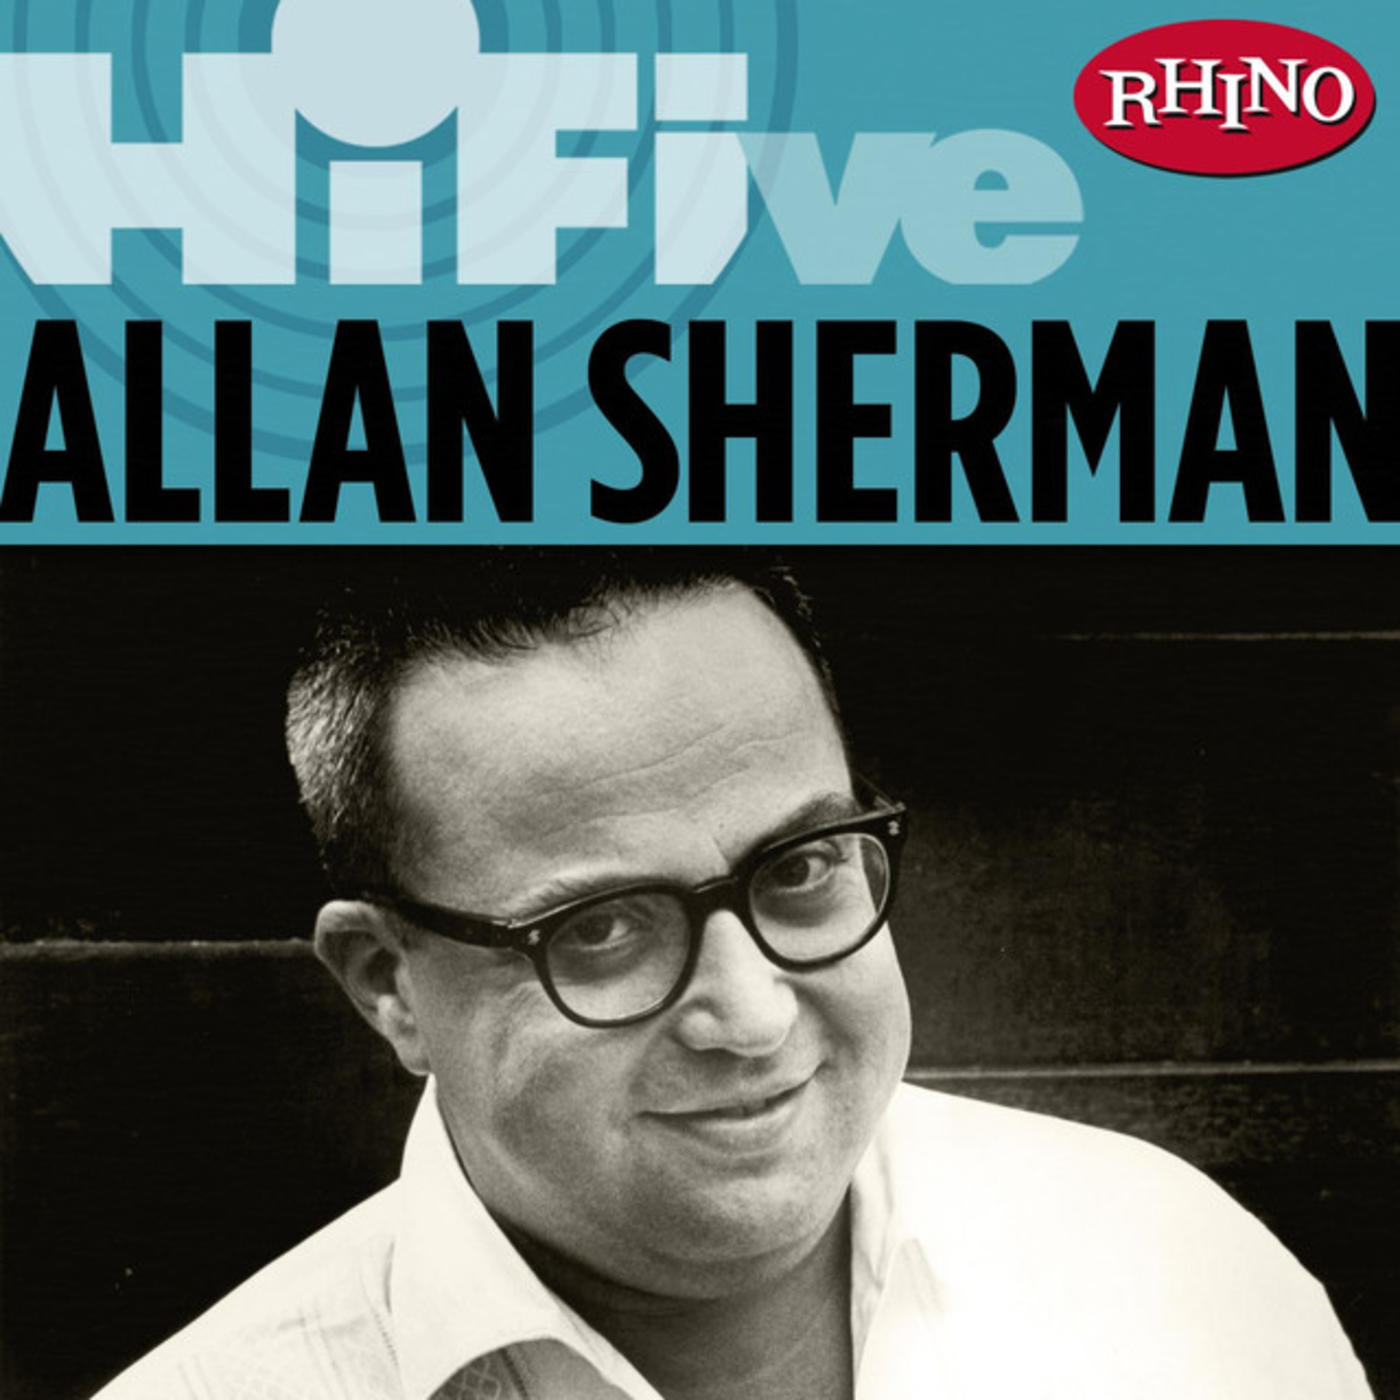 Allan Sherman Playlist